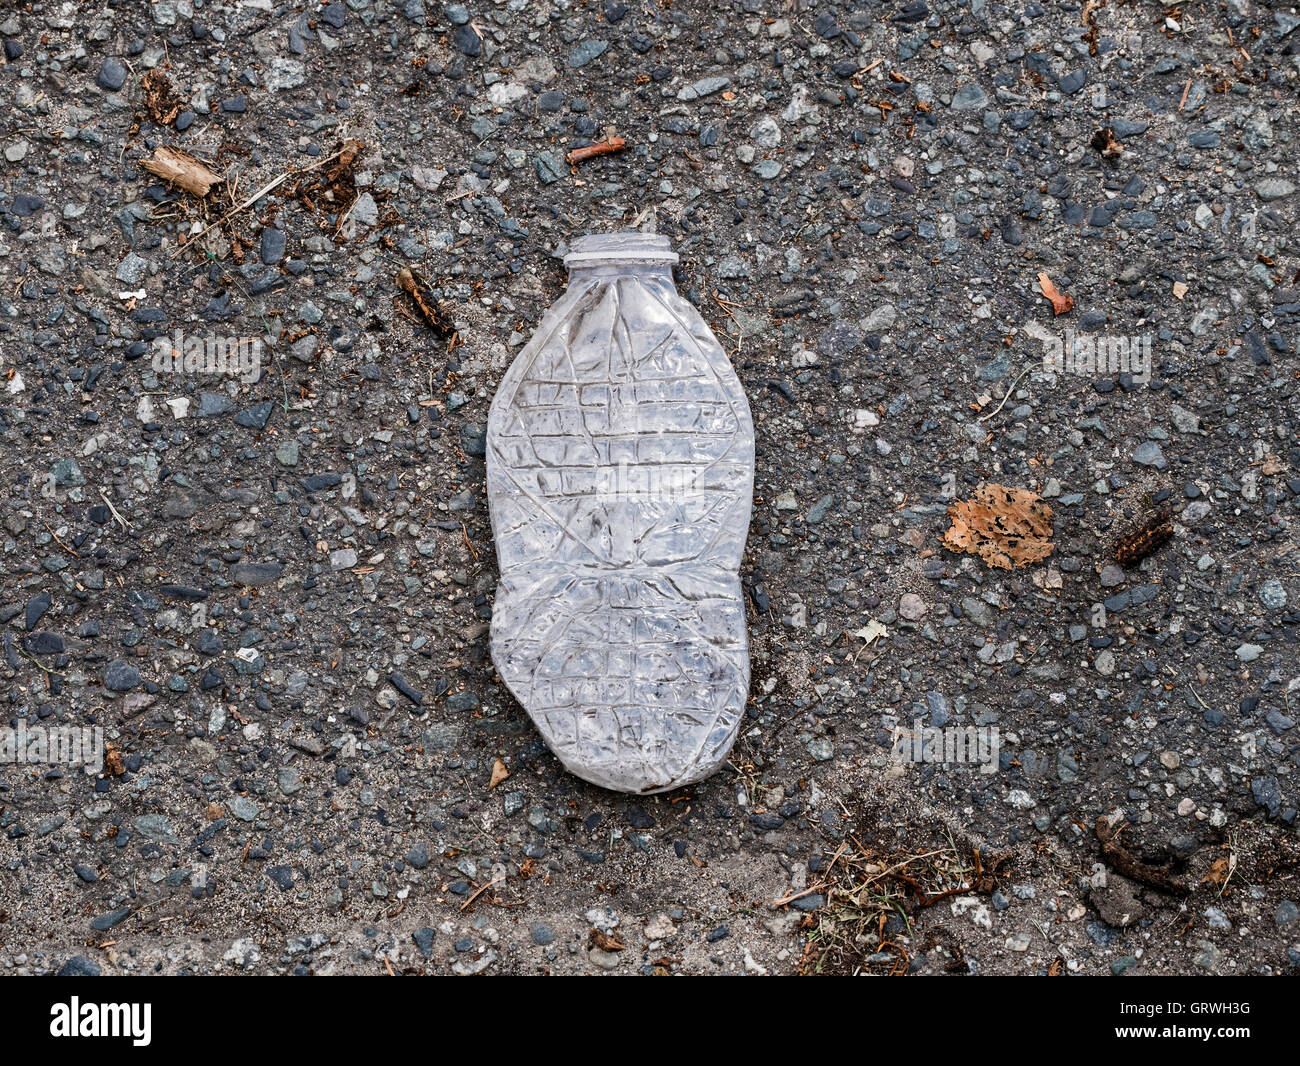 Litter crushed plastic bottle city street Stock Photo